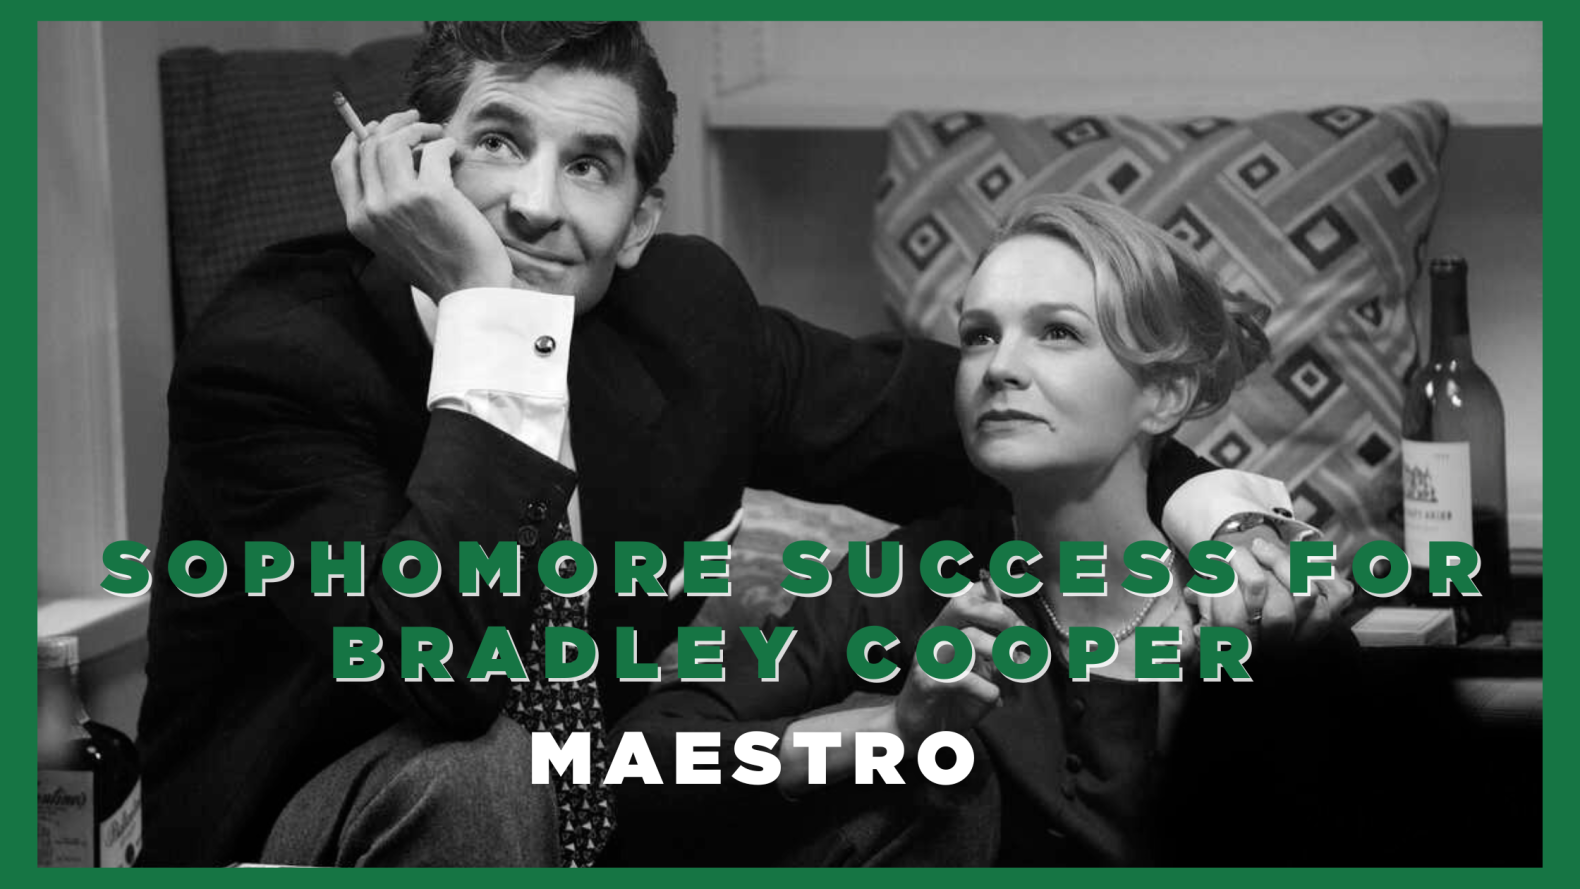 Maestro - Sophomore Success for Bradley Cooper